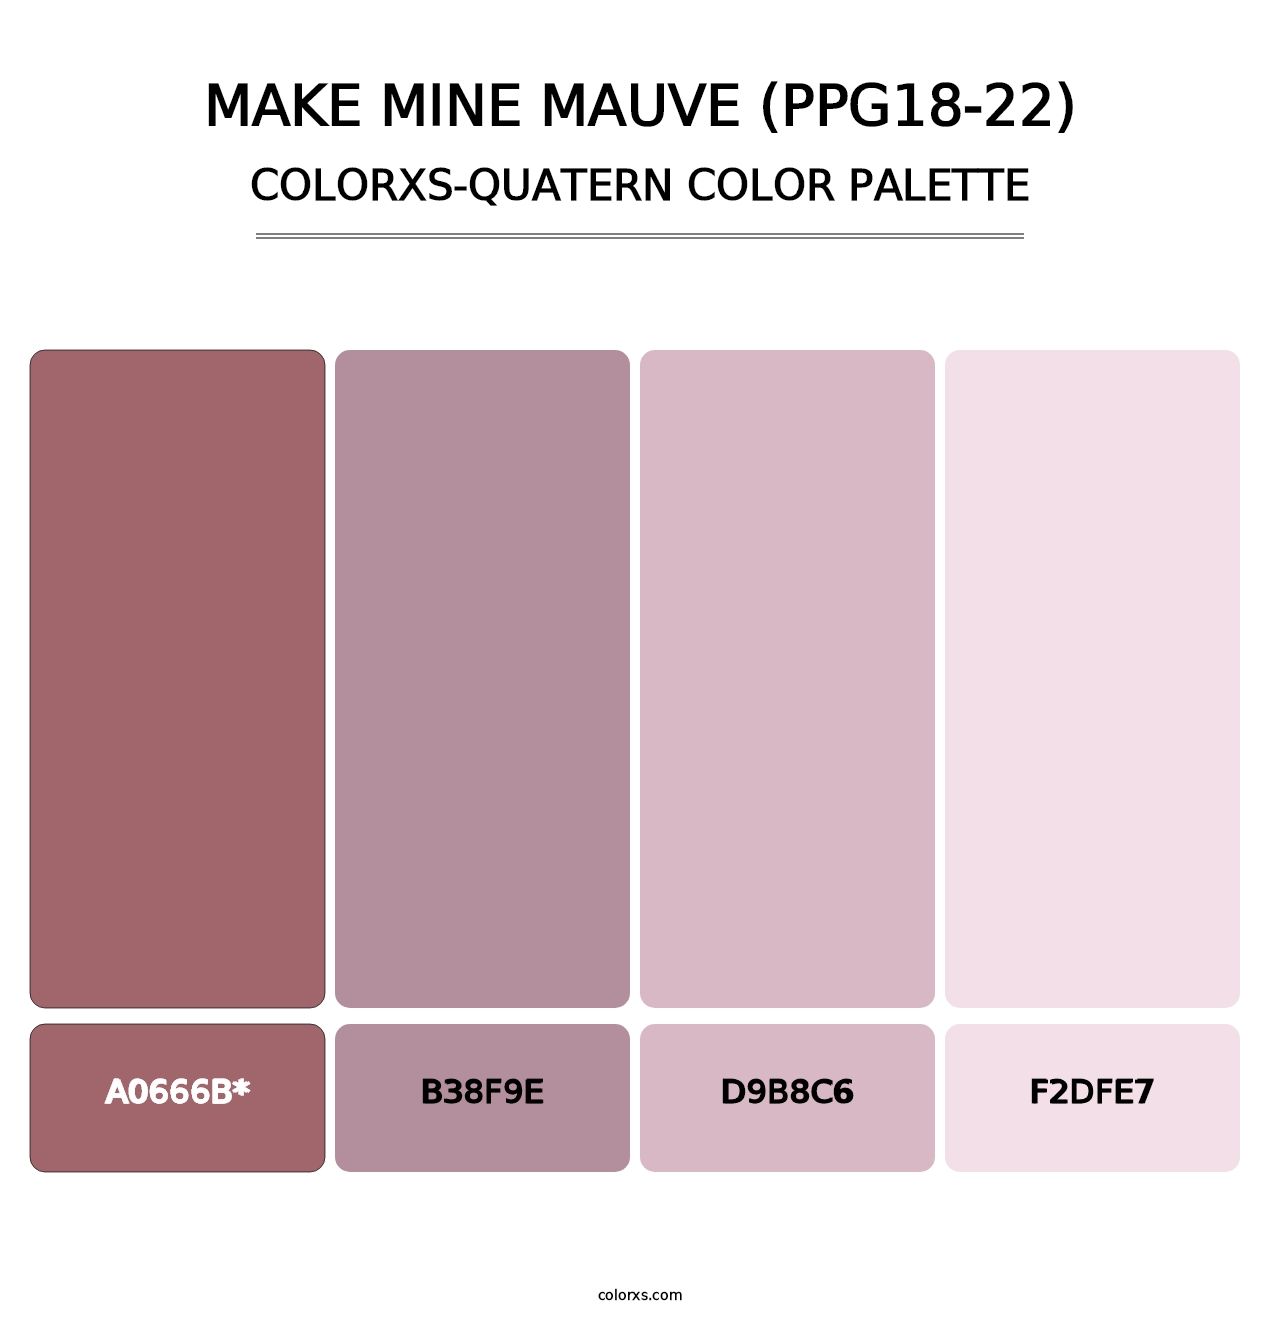 Make Mine Mauve (PPG18-22) - Colorxs Quatern Palette